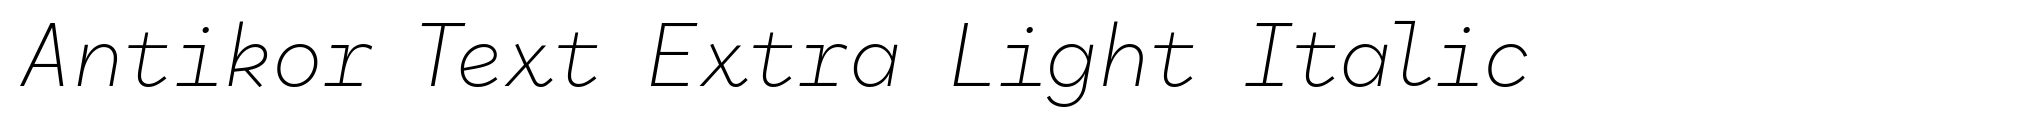 Antikor Text Extra Light Italic image